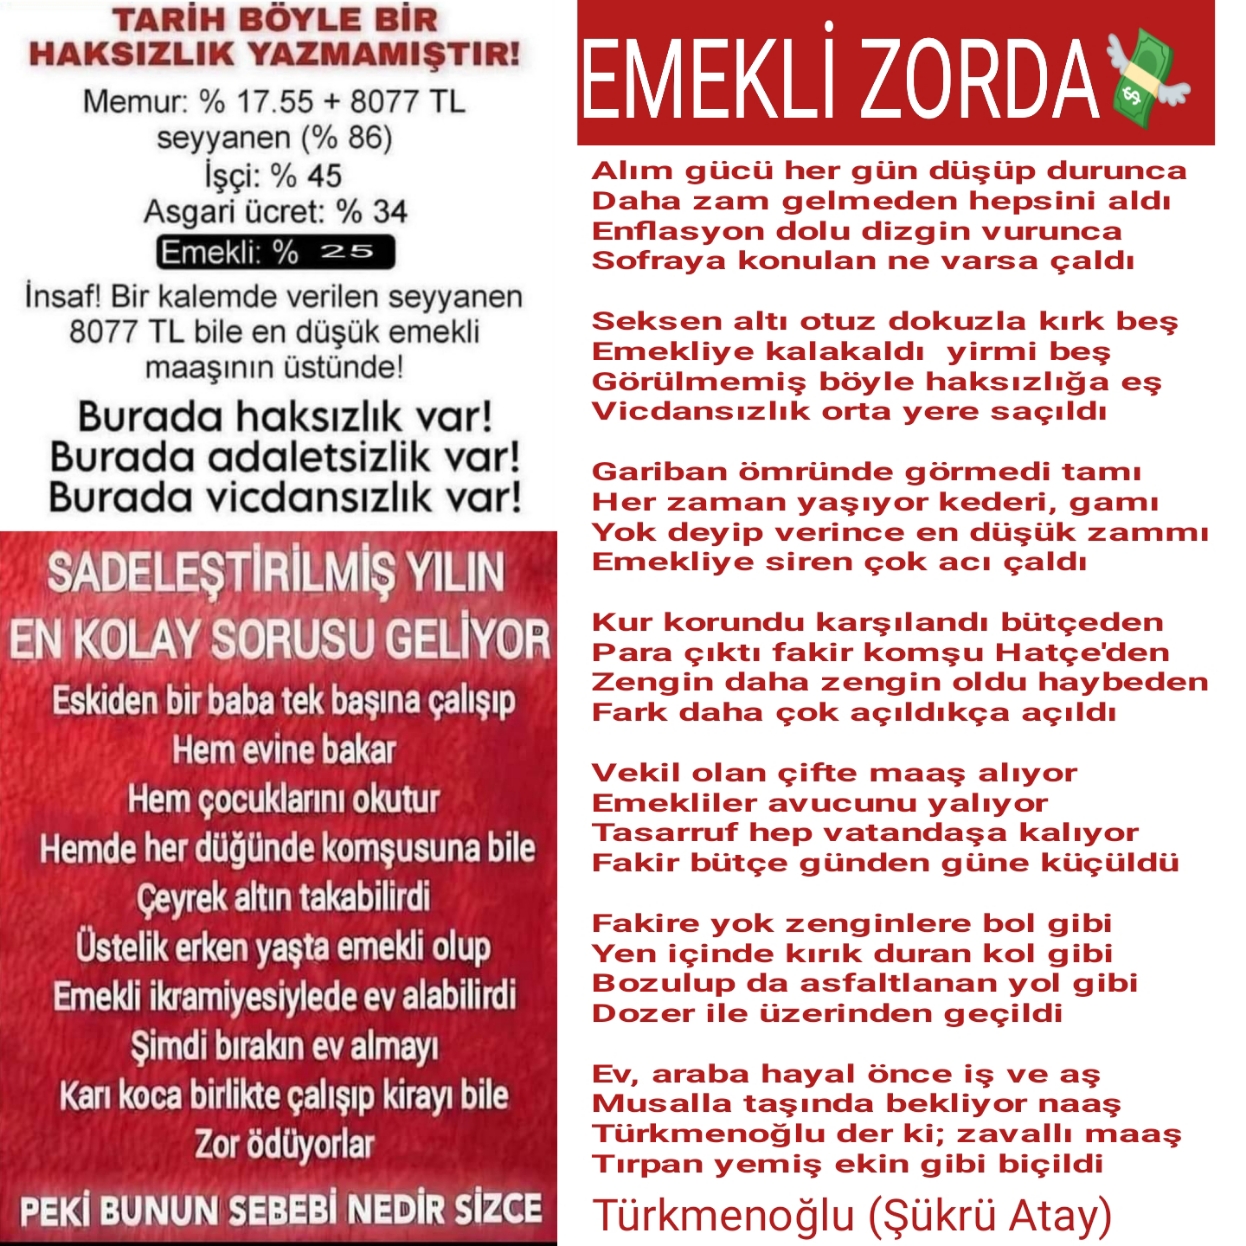 EMEKLİ ZORDA